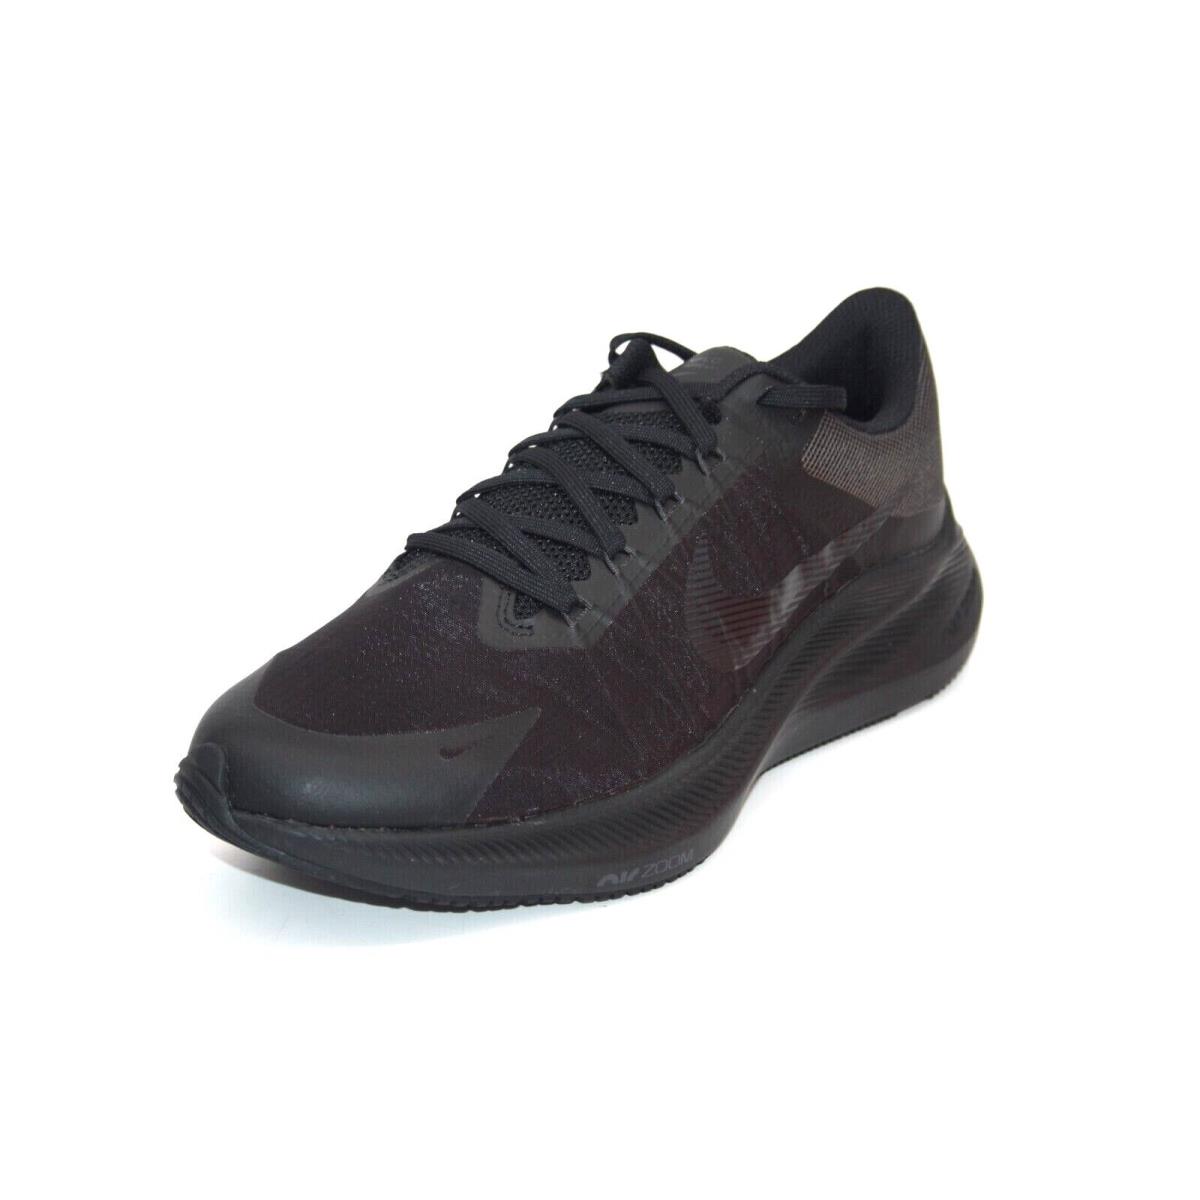 Nike shoes Zoom Winflo - Black/Smoke Grey/Dark Smoke Grey 0